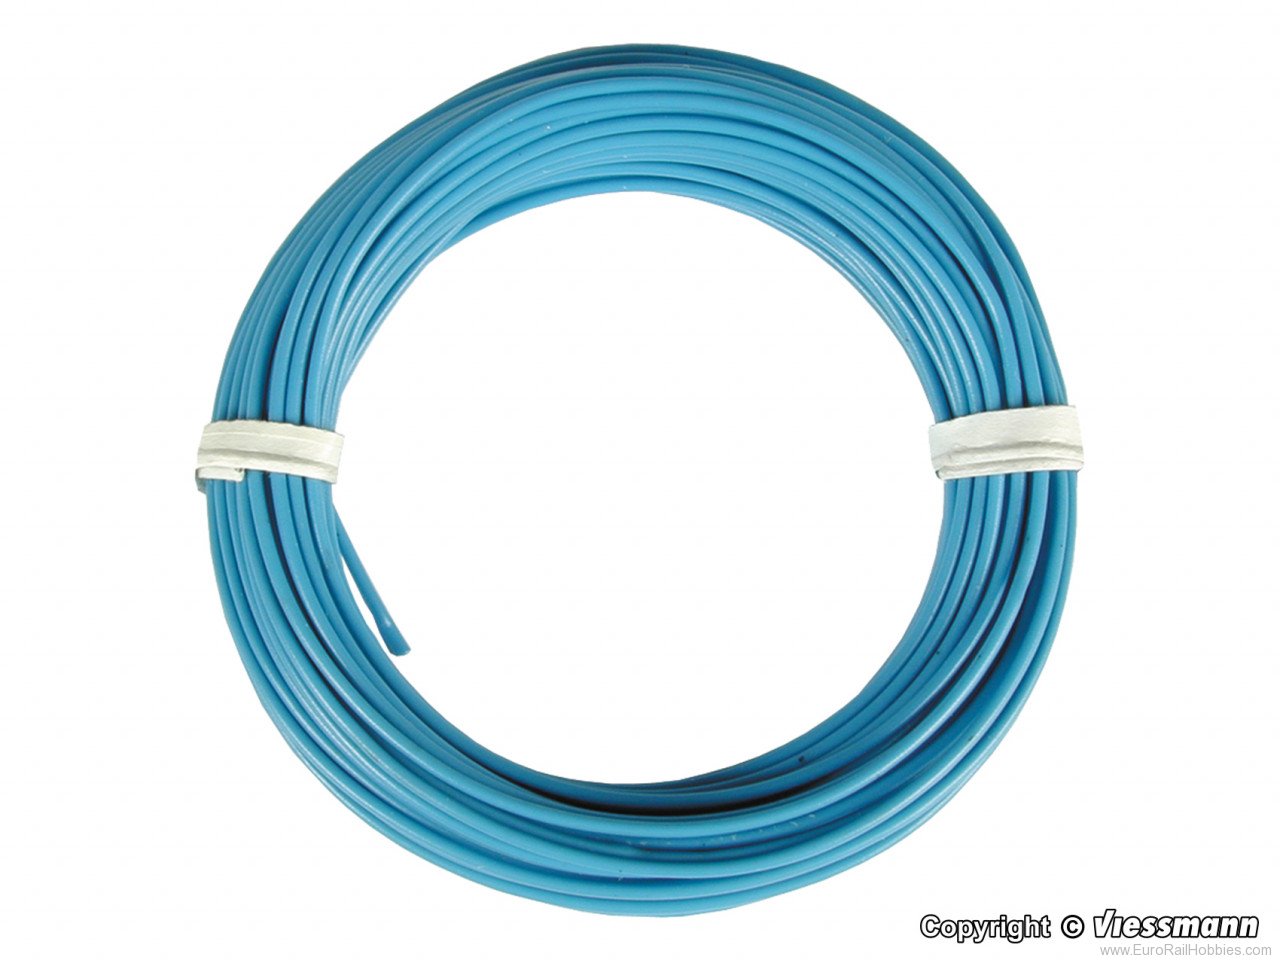 Viessmann 6861 Wire,0,14 mm dia., blue, 10 m